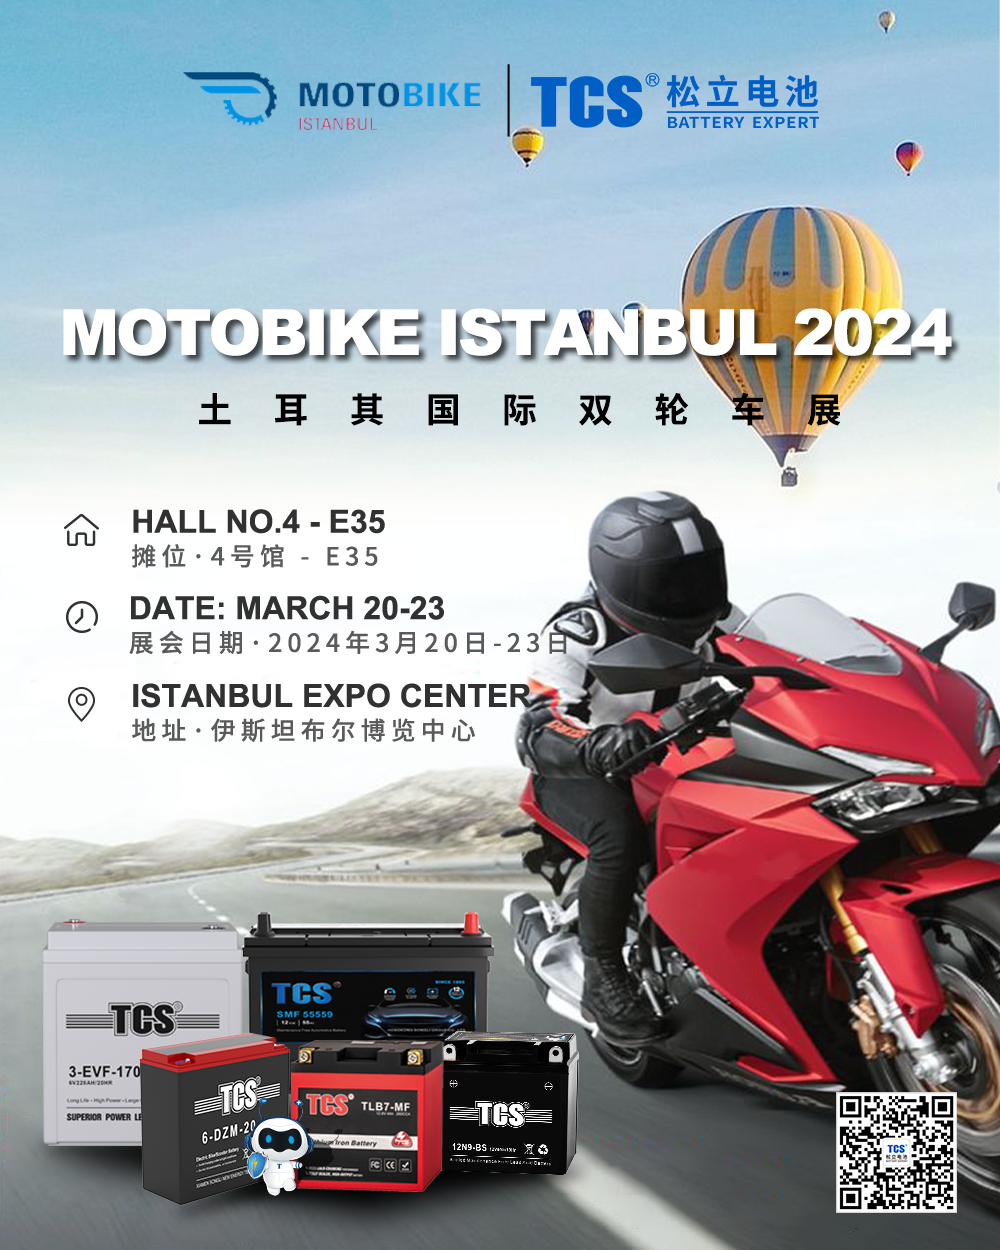 TCS Battery Motorbike Istanbul 2024